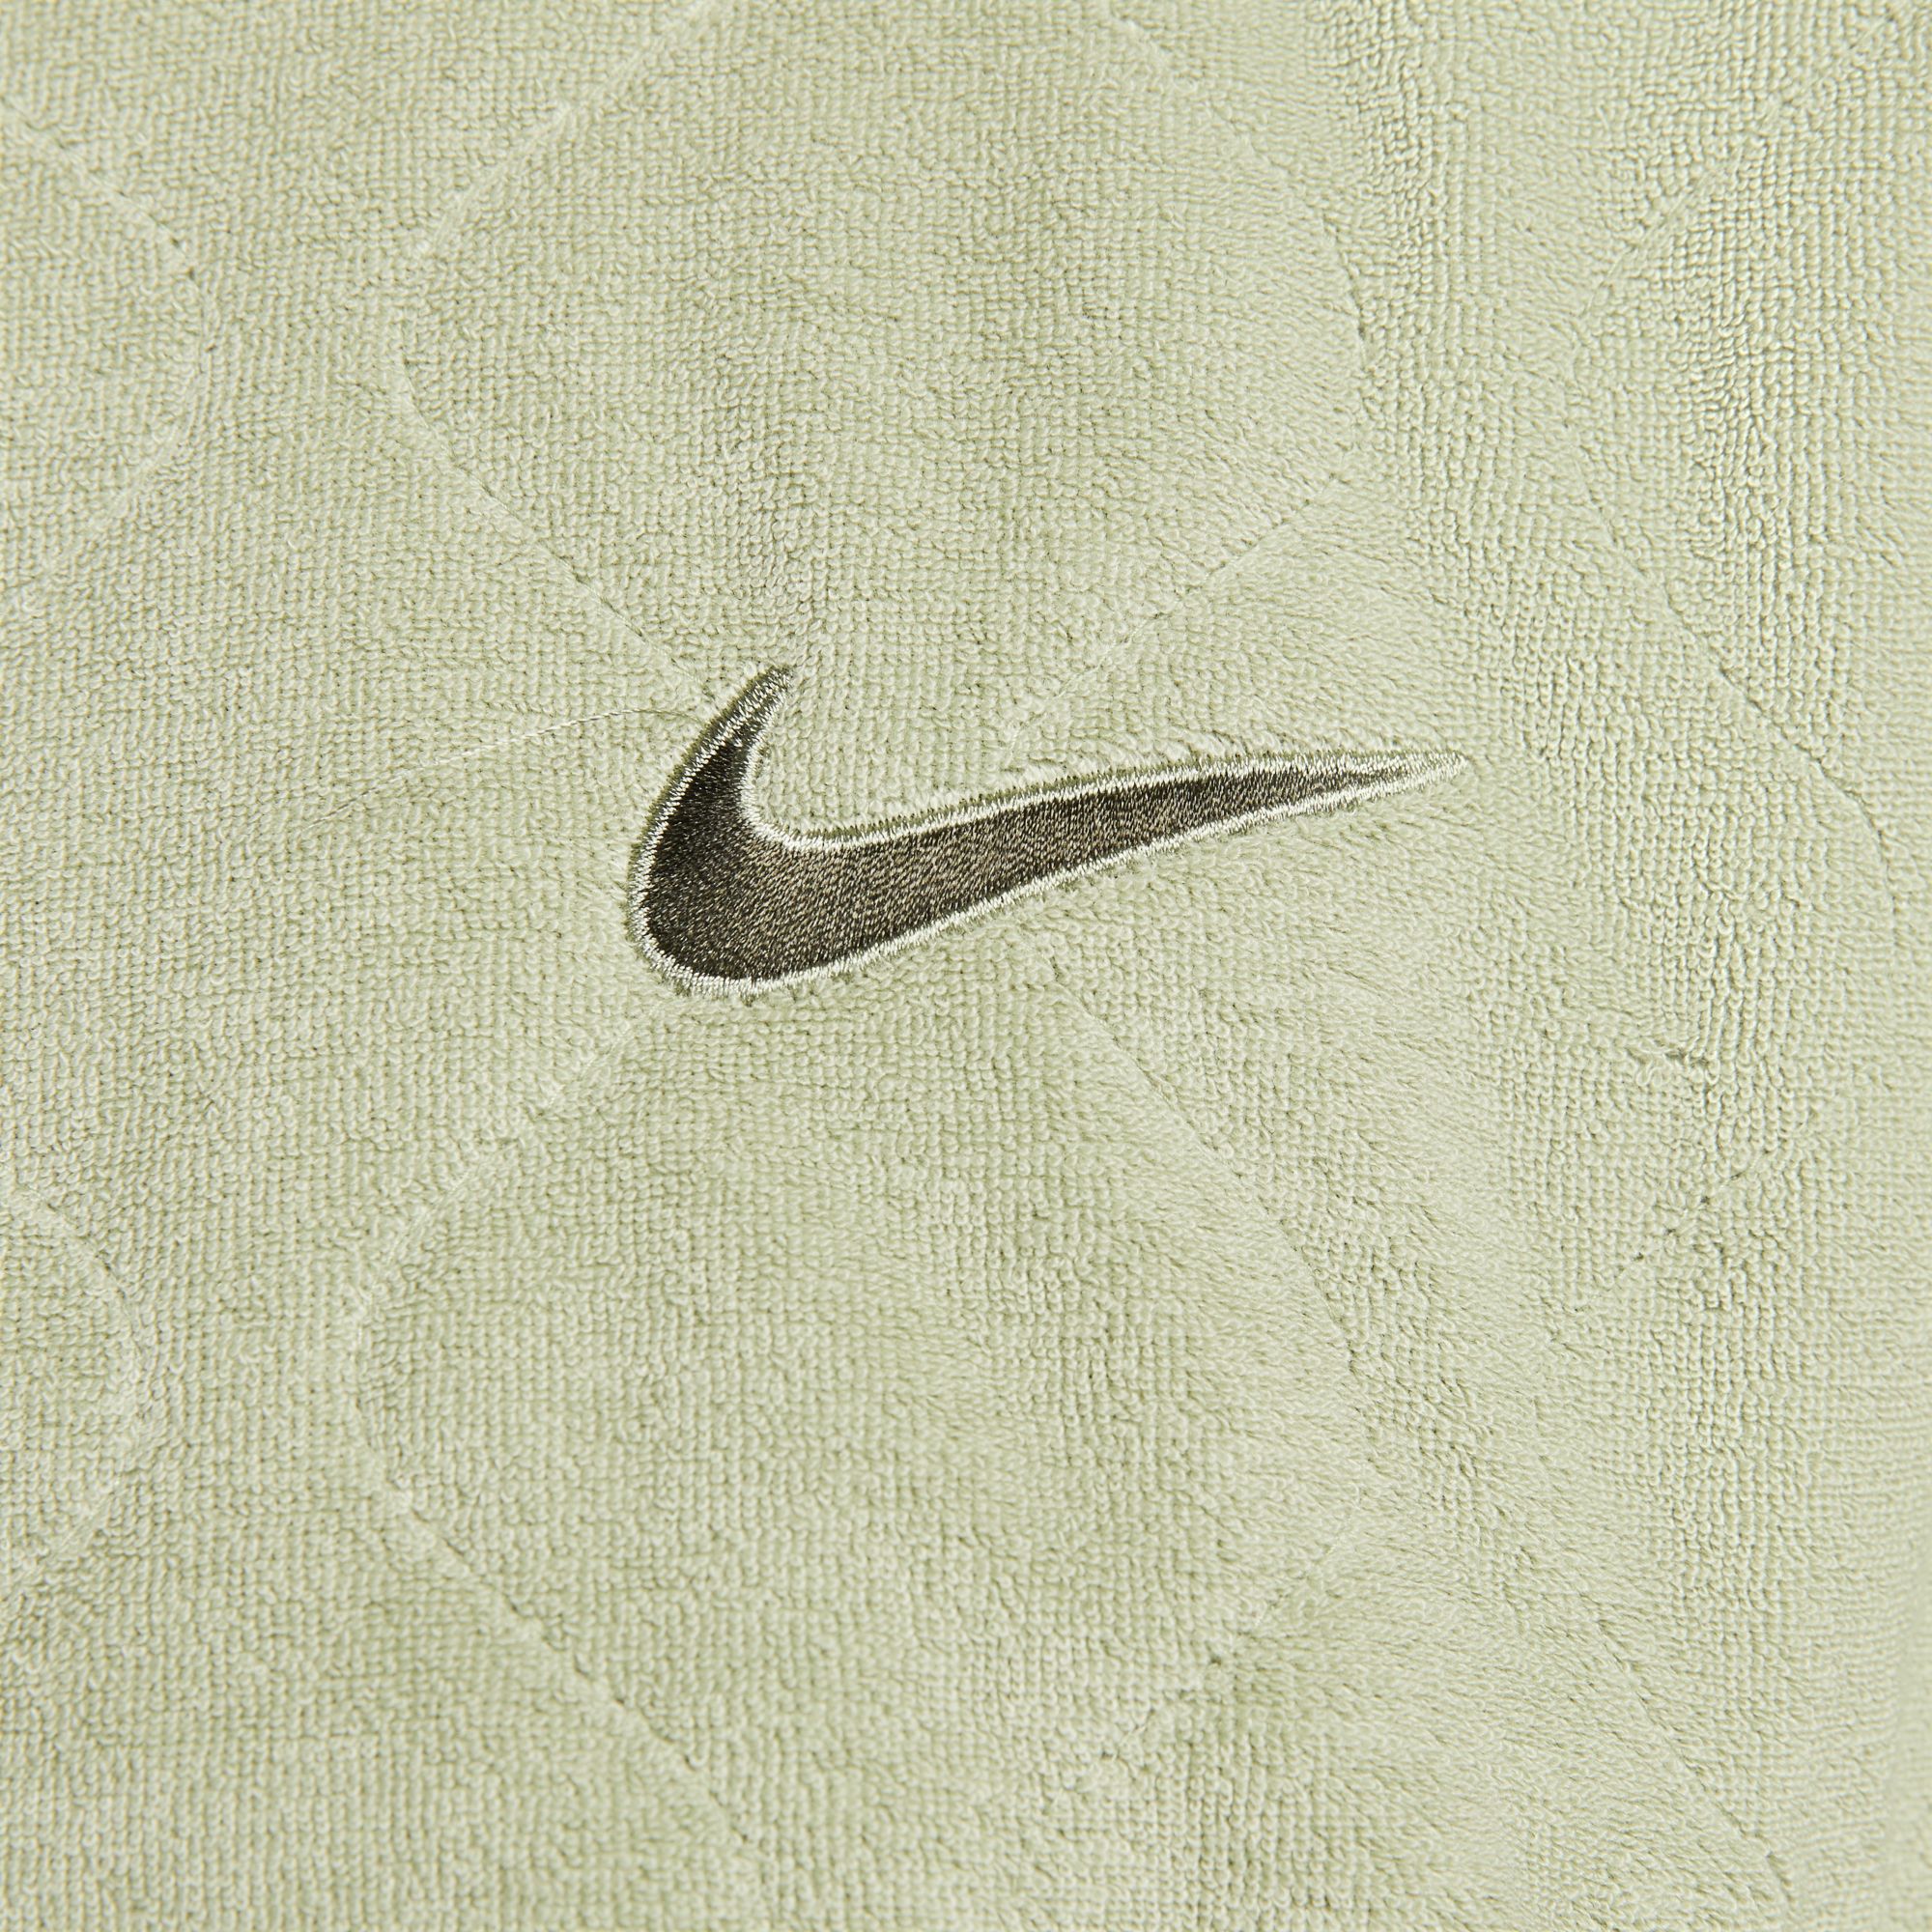 Nike Sportswear, Verde Aceite/Caqui Militar, hi-res